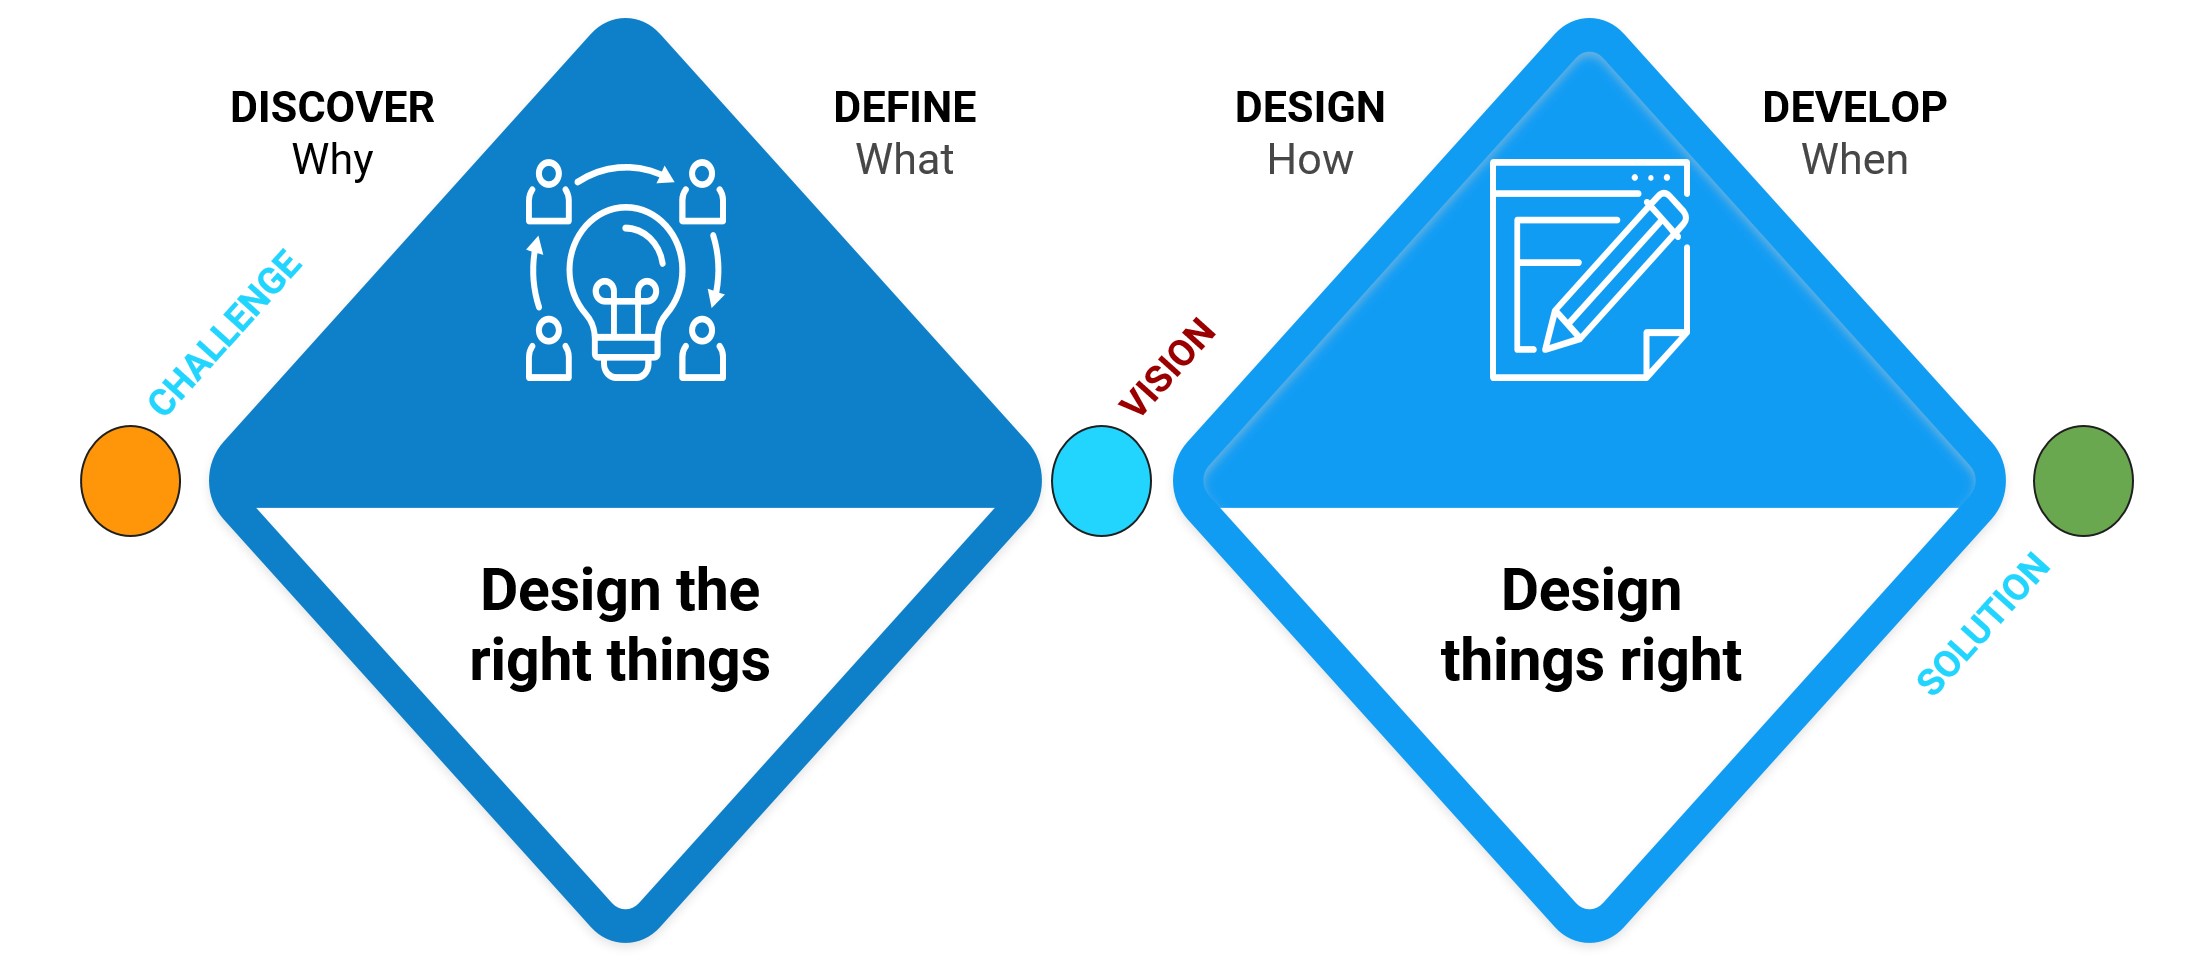 Design Thinking Process - The Double Diamond